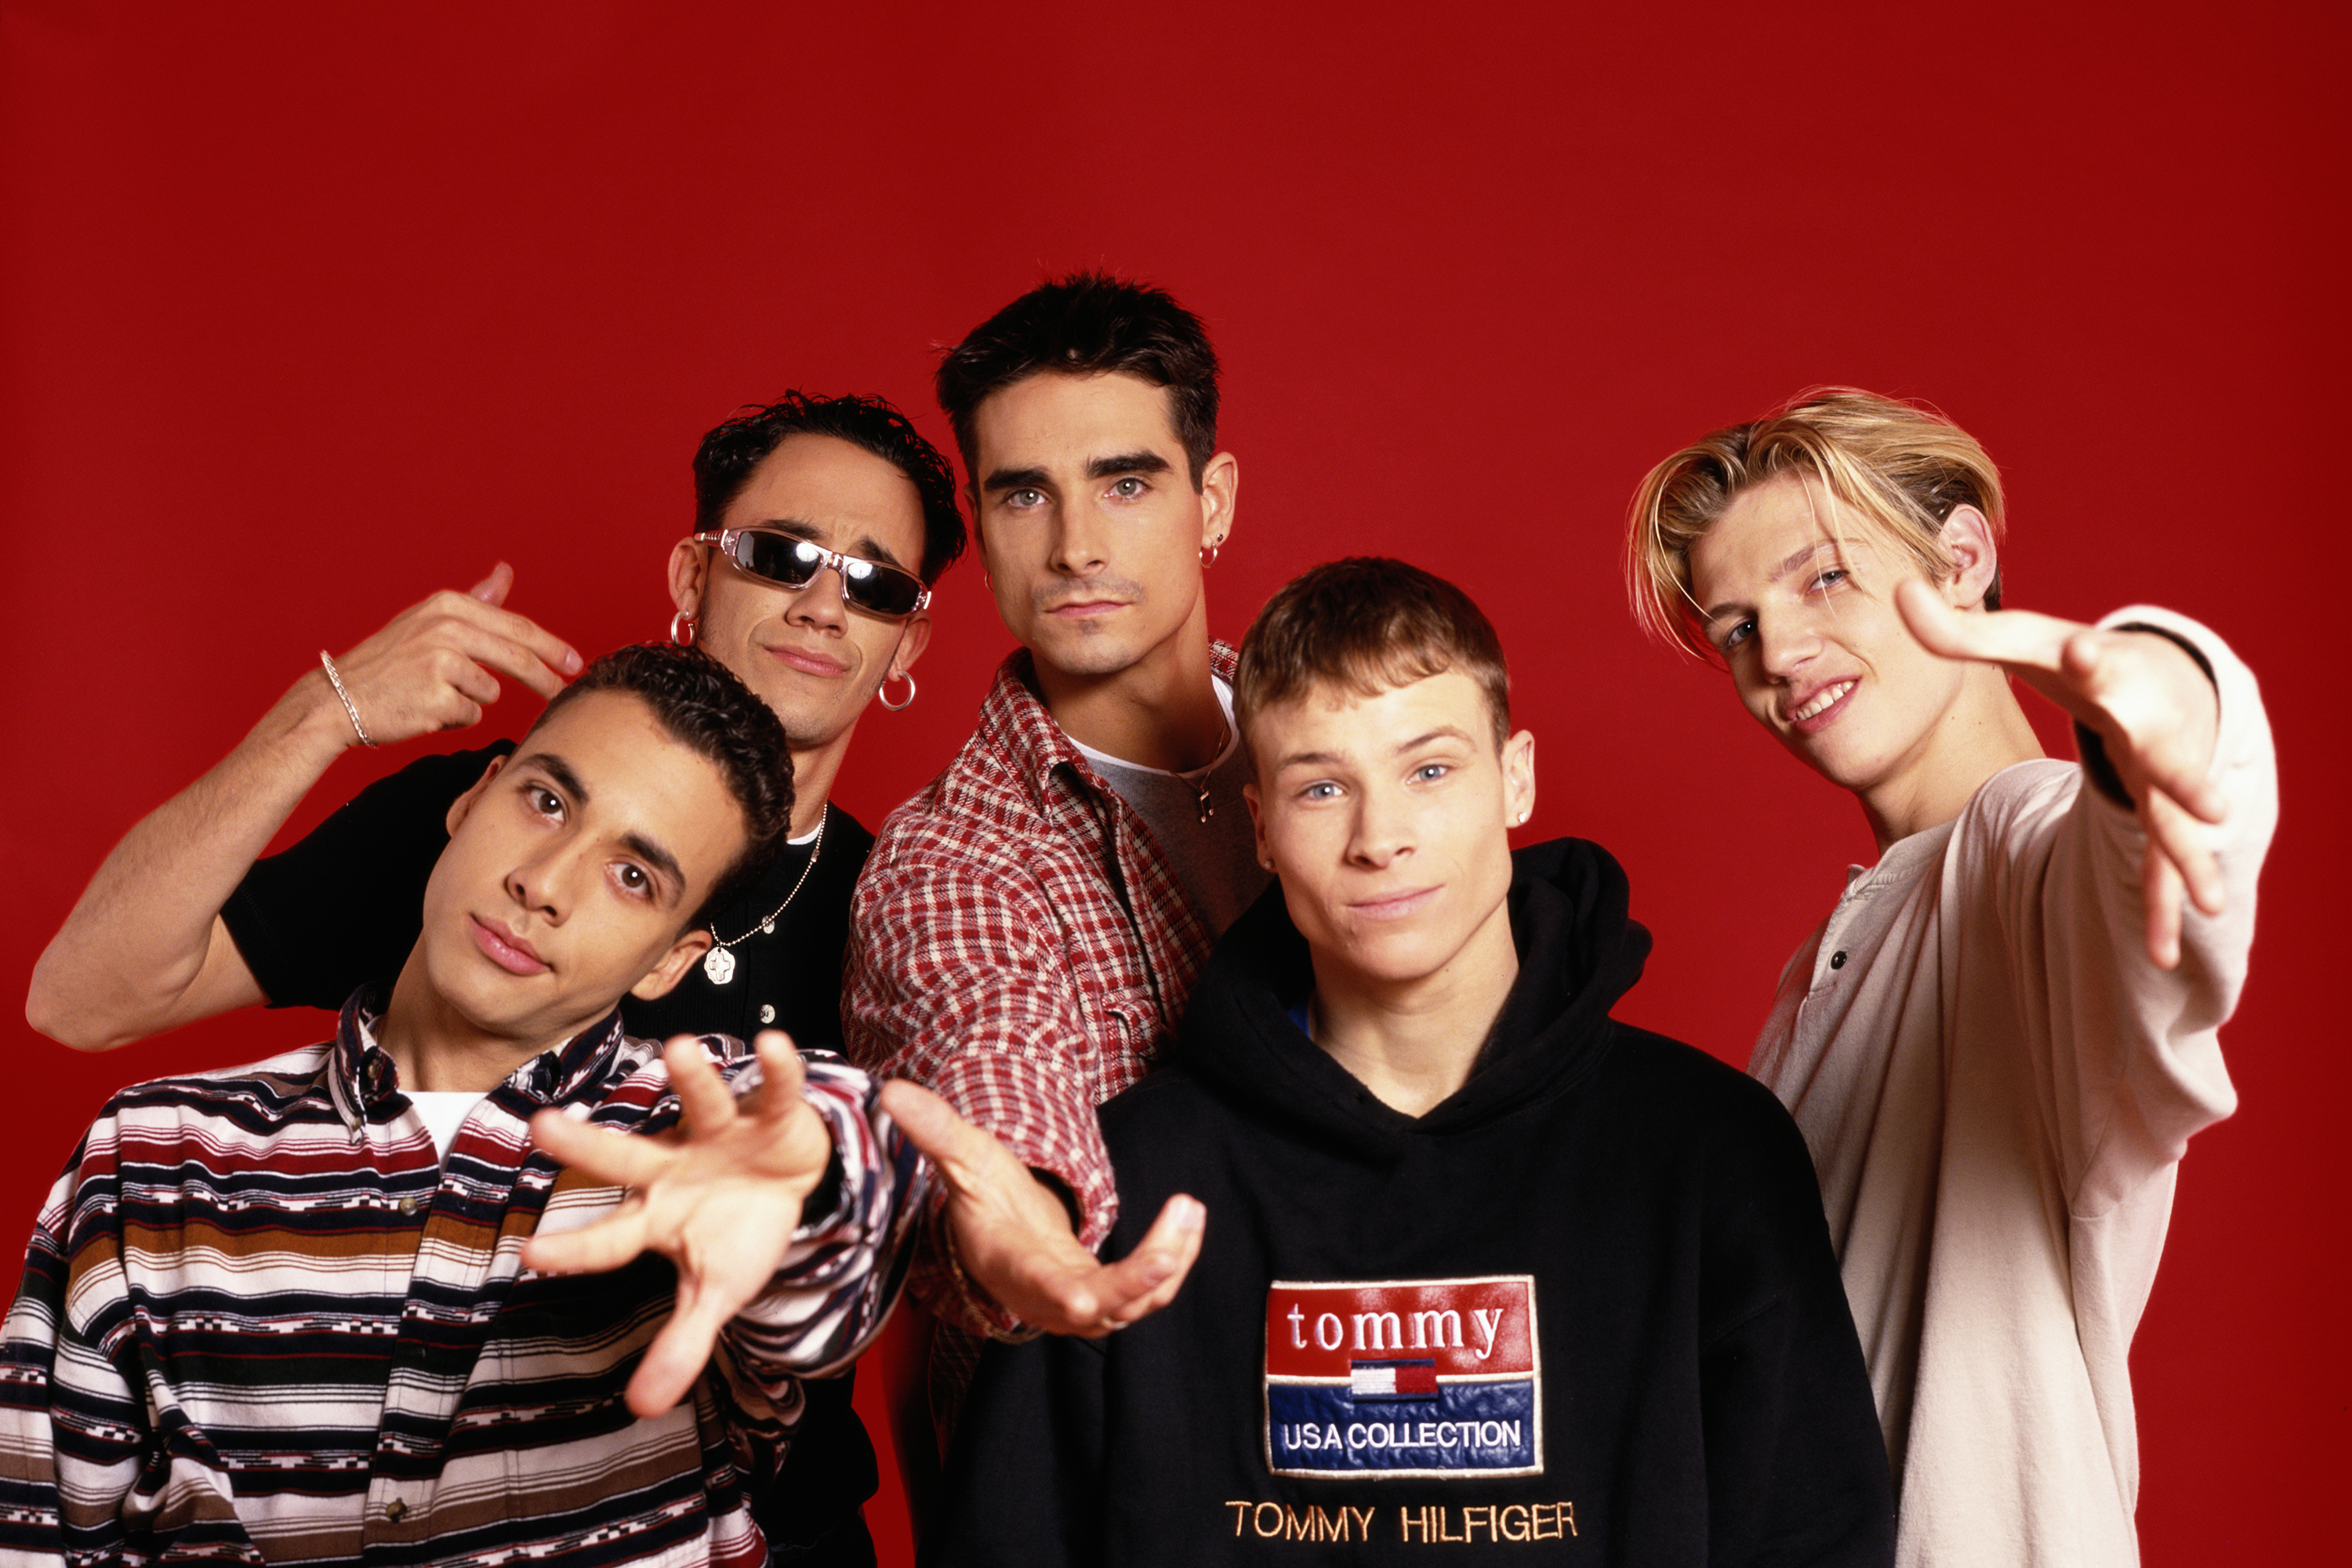 Муз группа 2. Группа бэкстрит бойс. Backstreet boys 1993. Группа Backstreet boys 90х. Группа Backstreet boys в молодости.